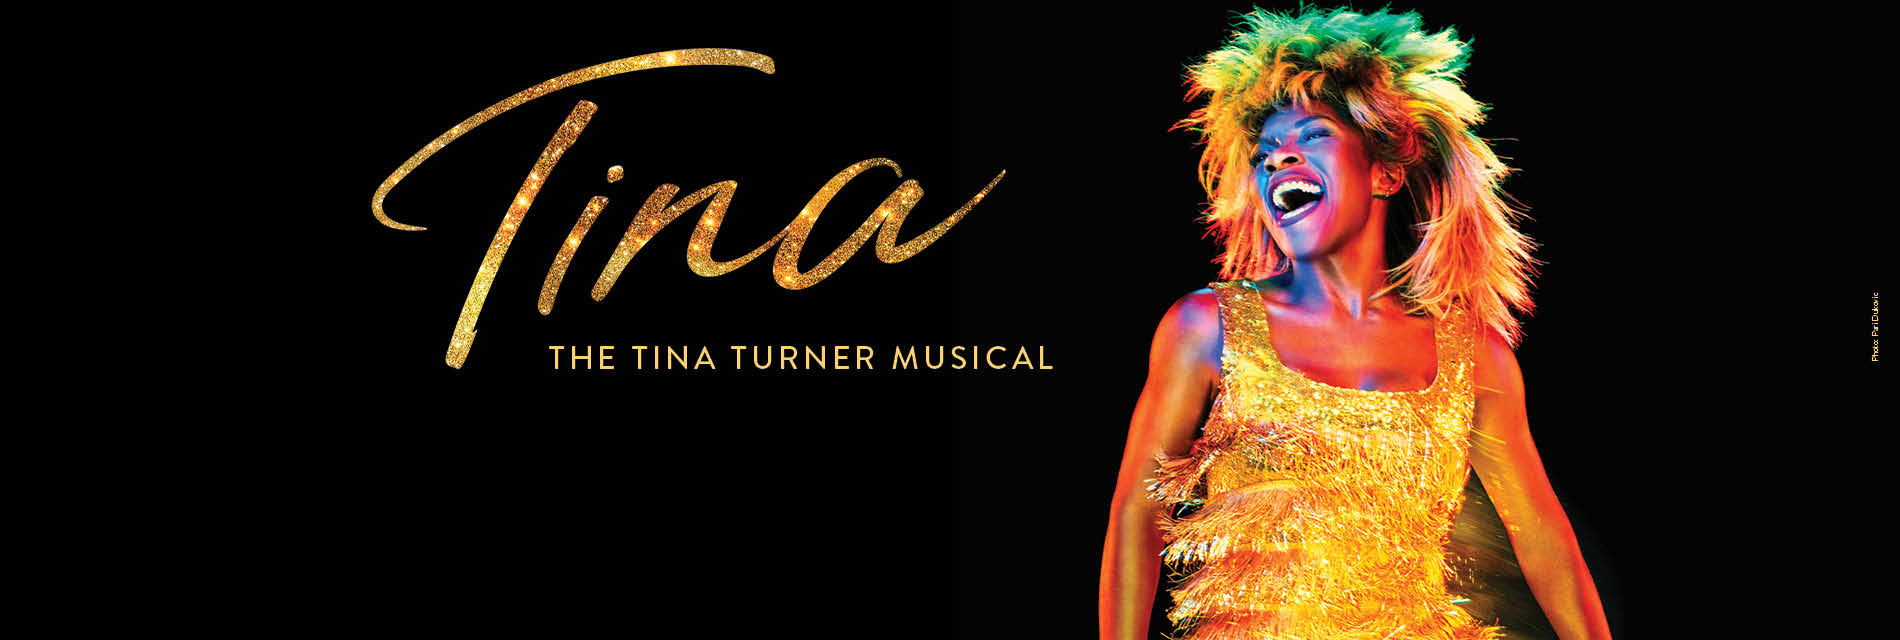 Slide 1: Tina - The Tina Turner Musical